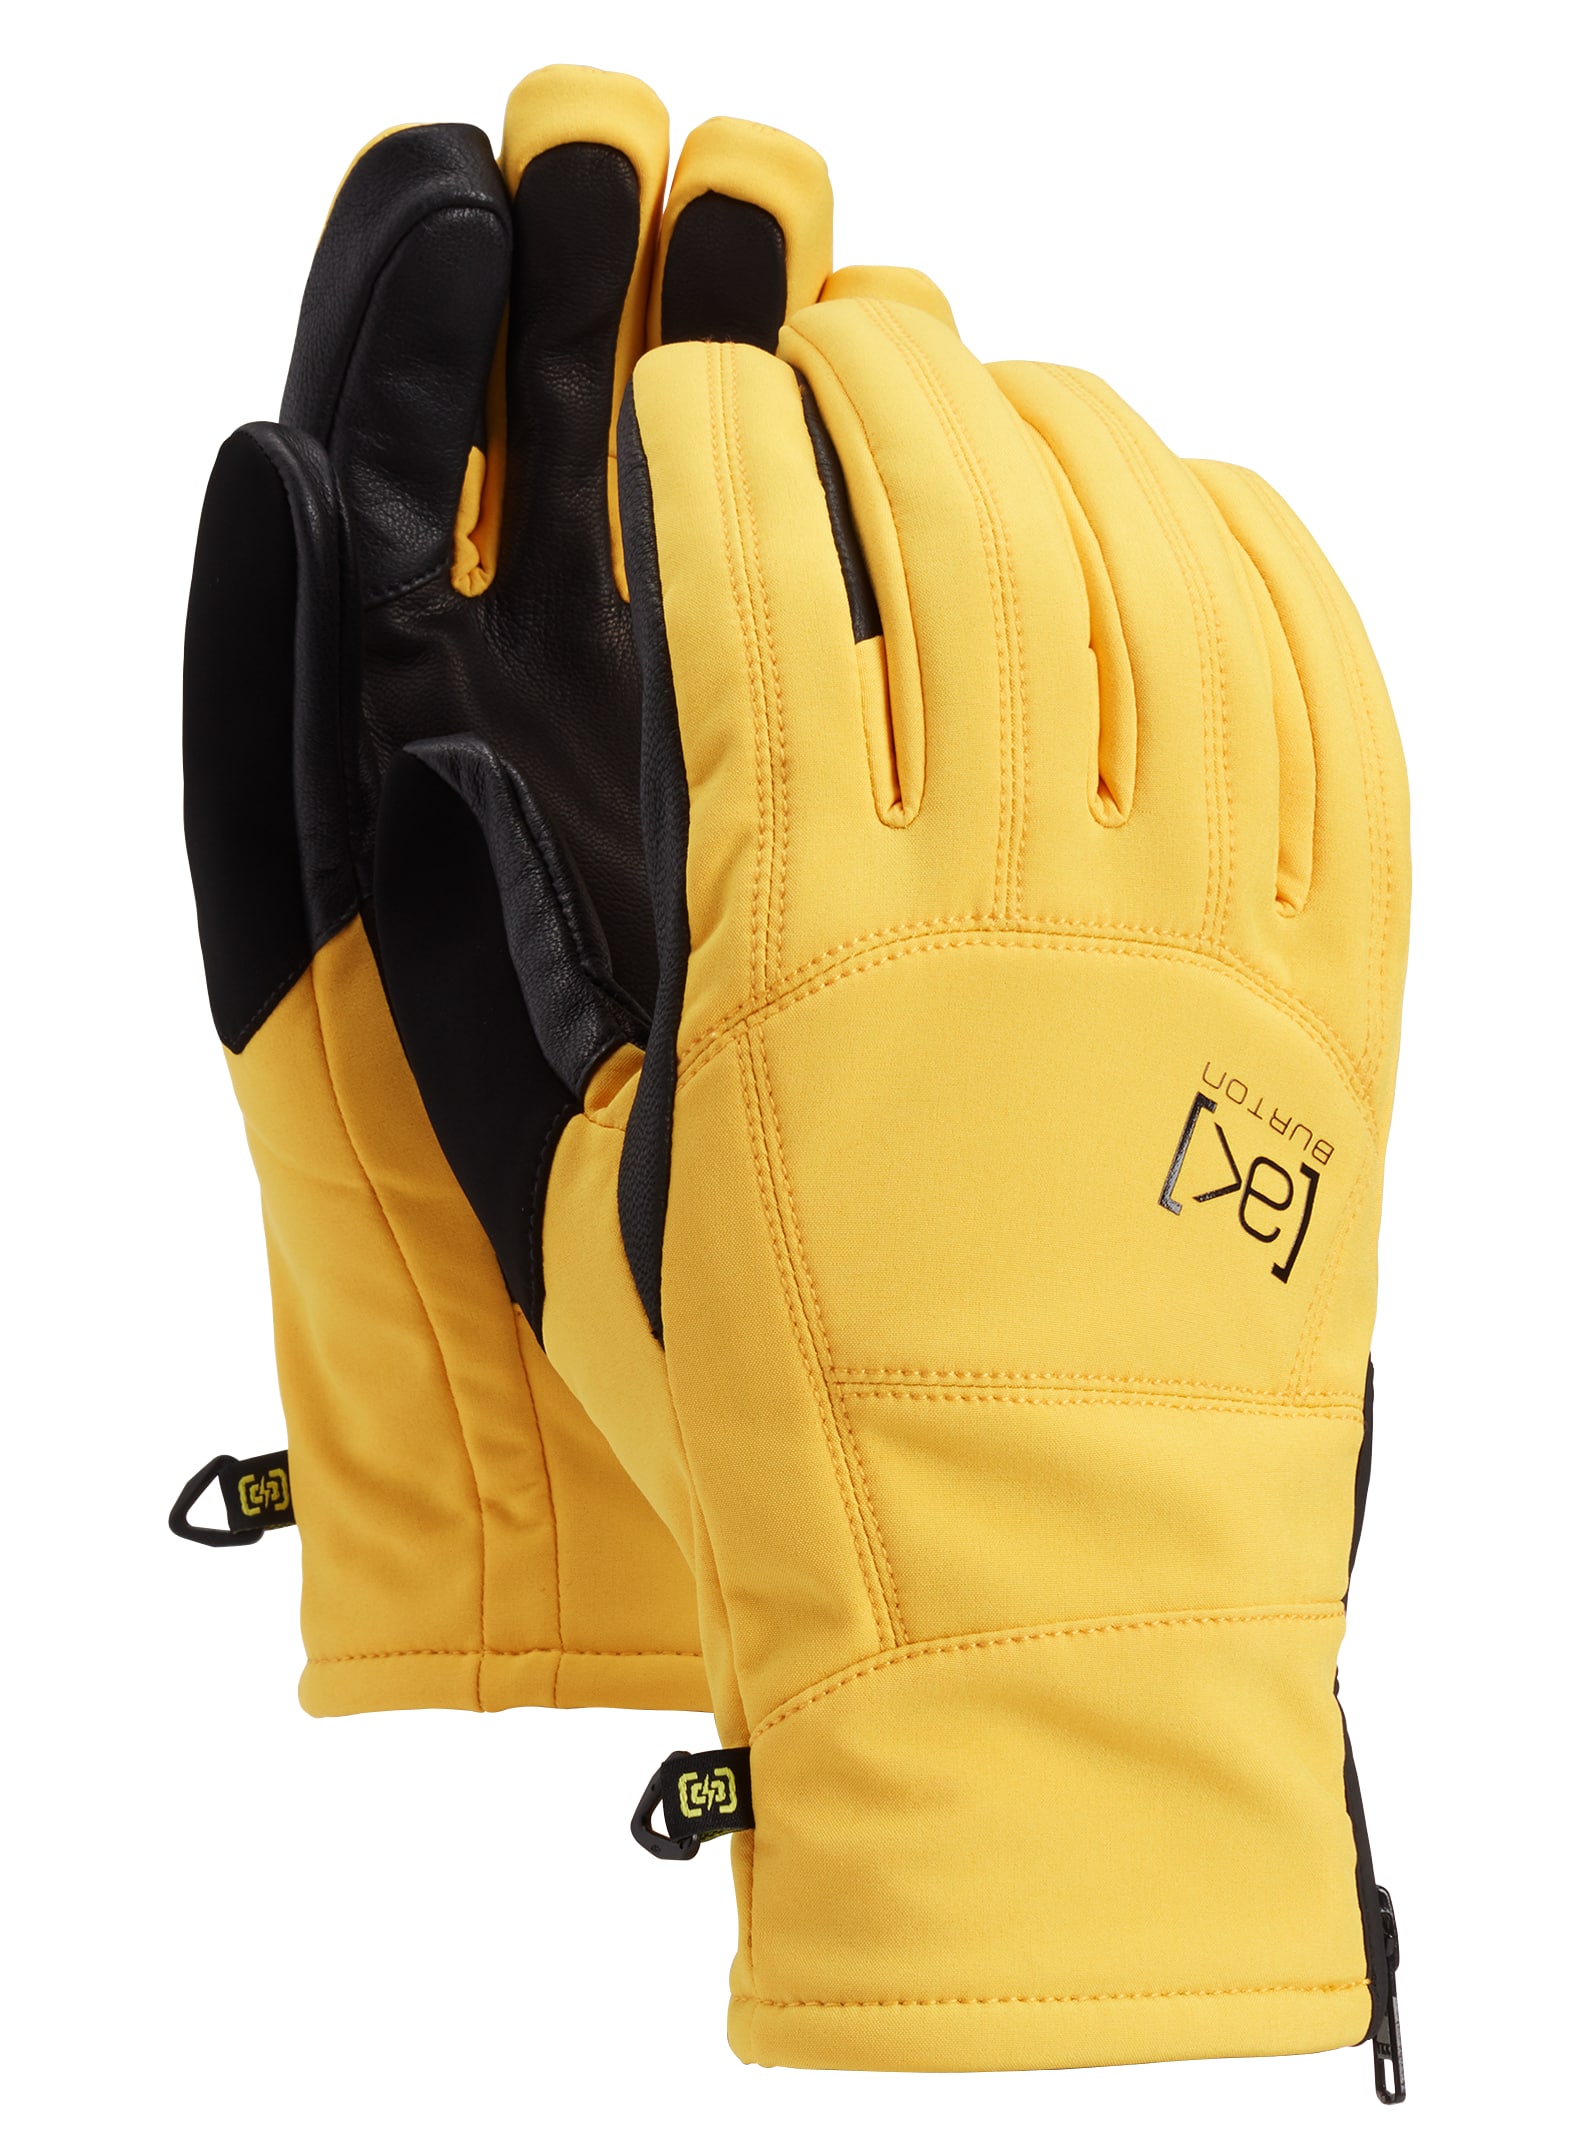 Men's Burton [ak] Tech Glove | Burton.com Winter 2021 ES